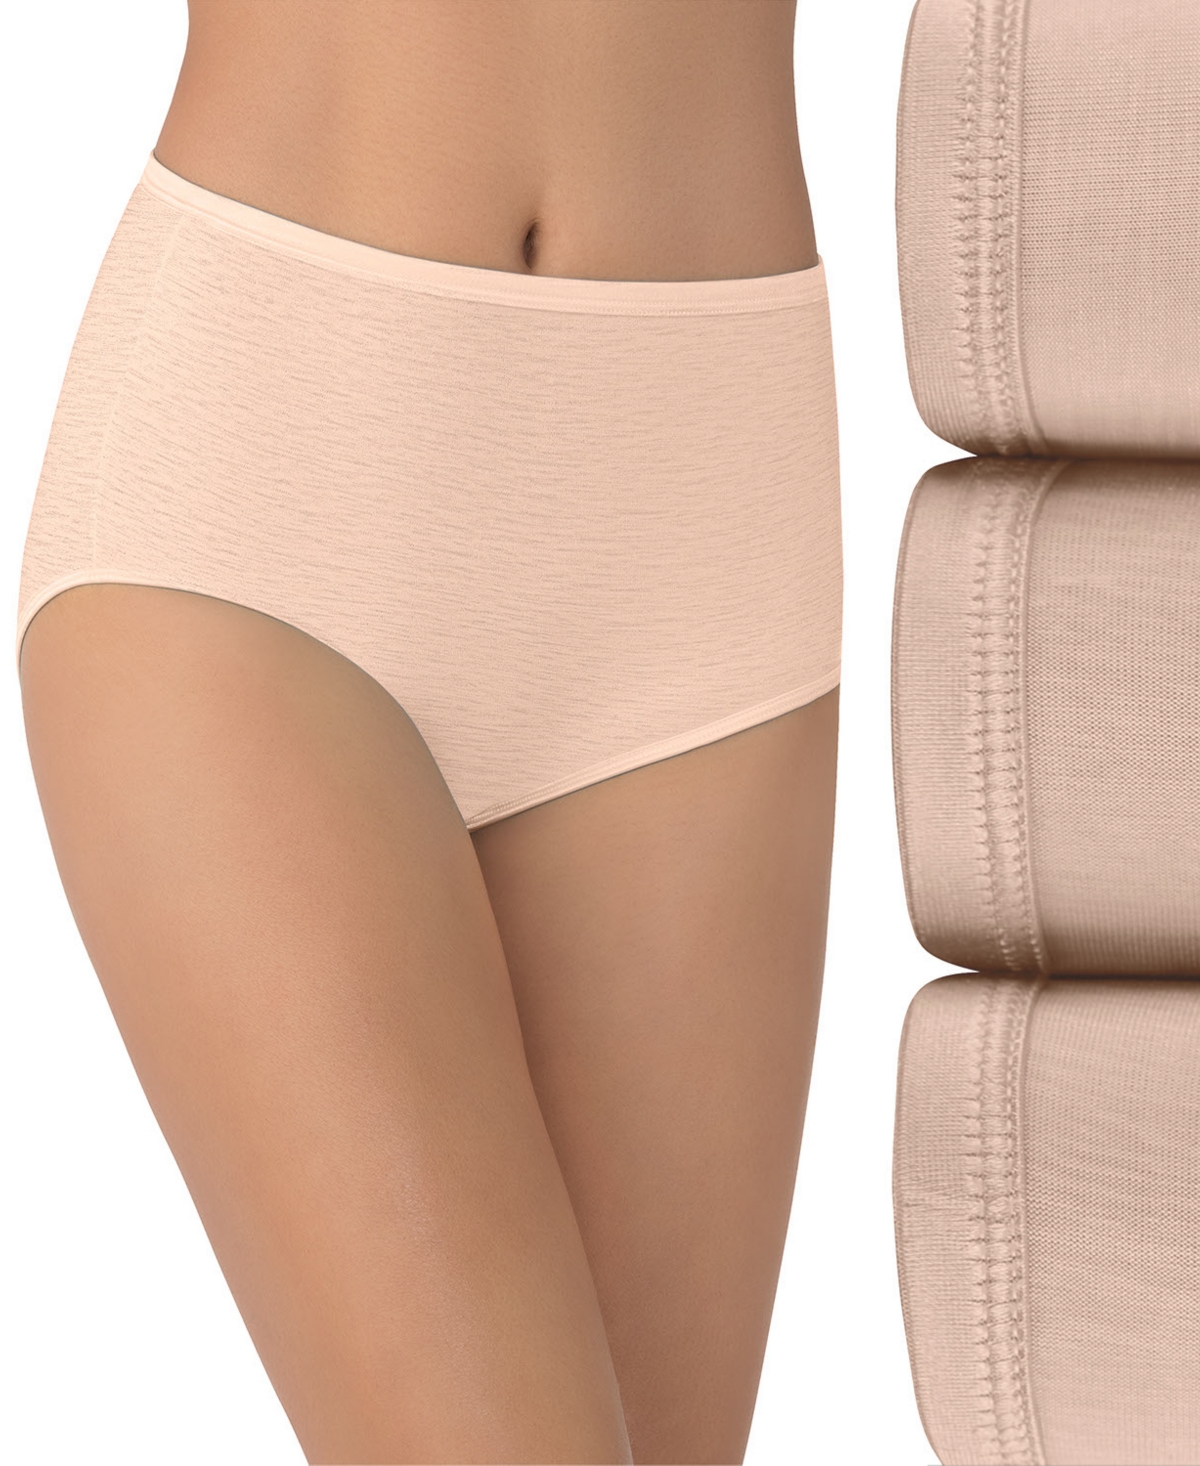 Women's 3-Pk. Illumination Brief Underwear 13310 - Swh Multi